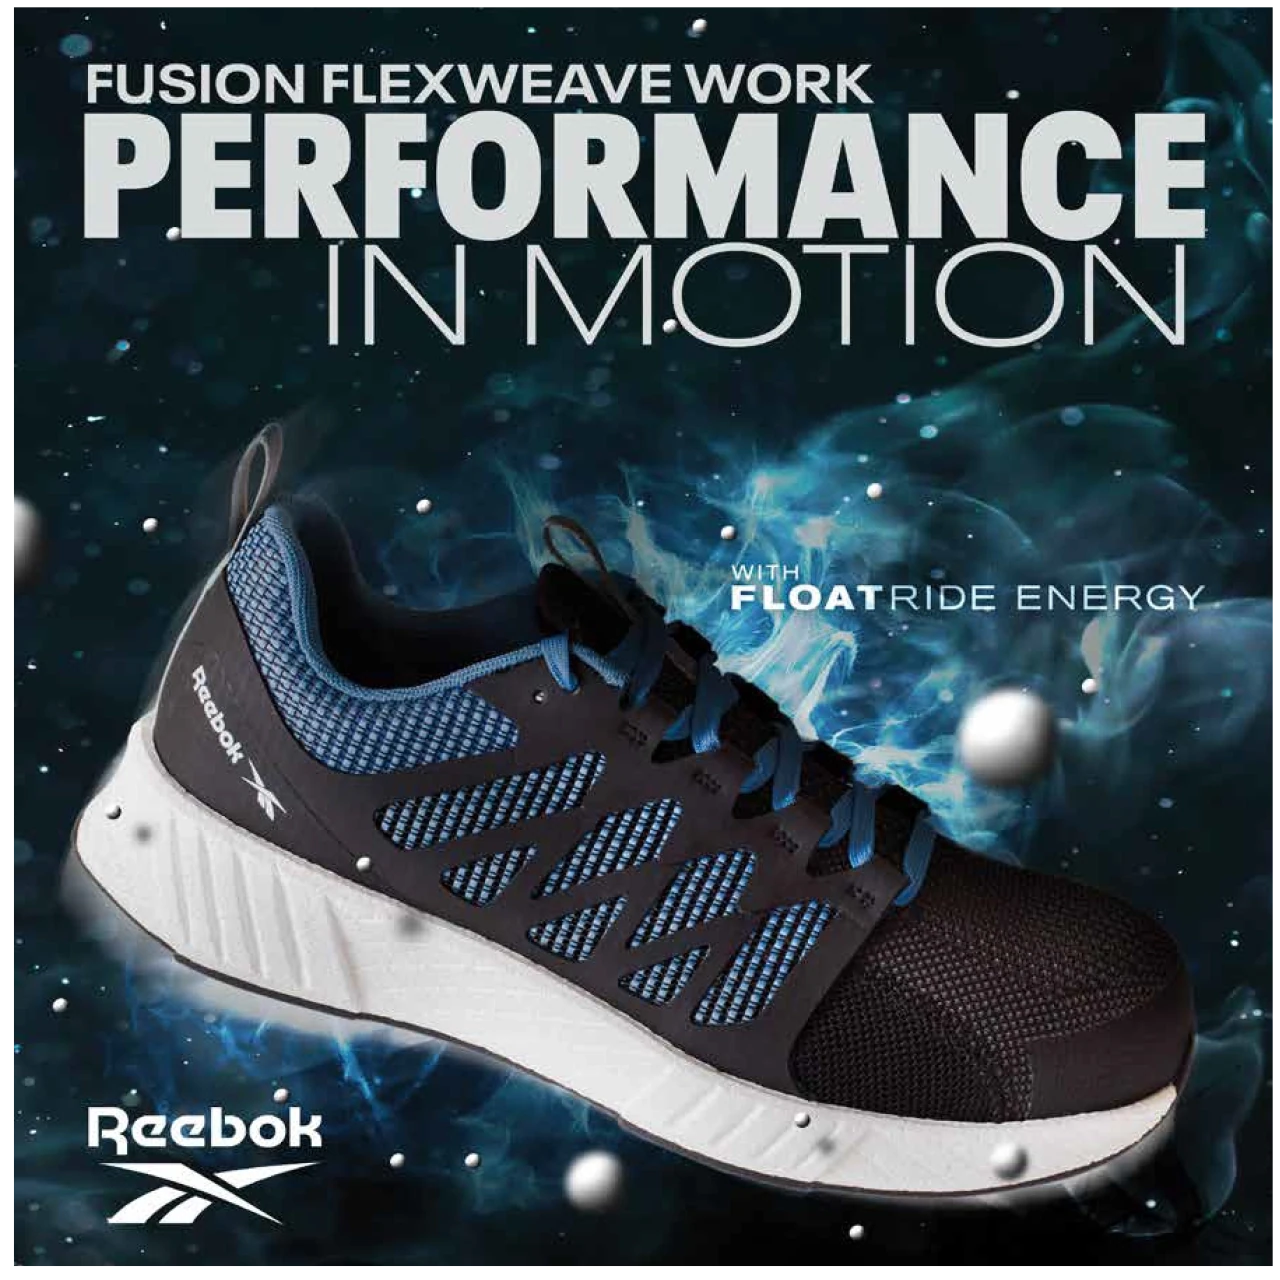 Men's Fusion Flexweave Composite Toe Athletic Work Shoe by Reebok